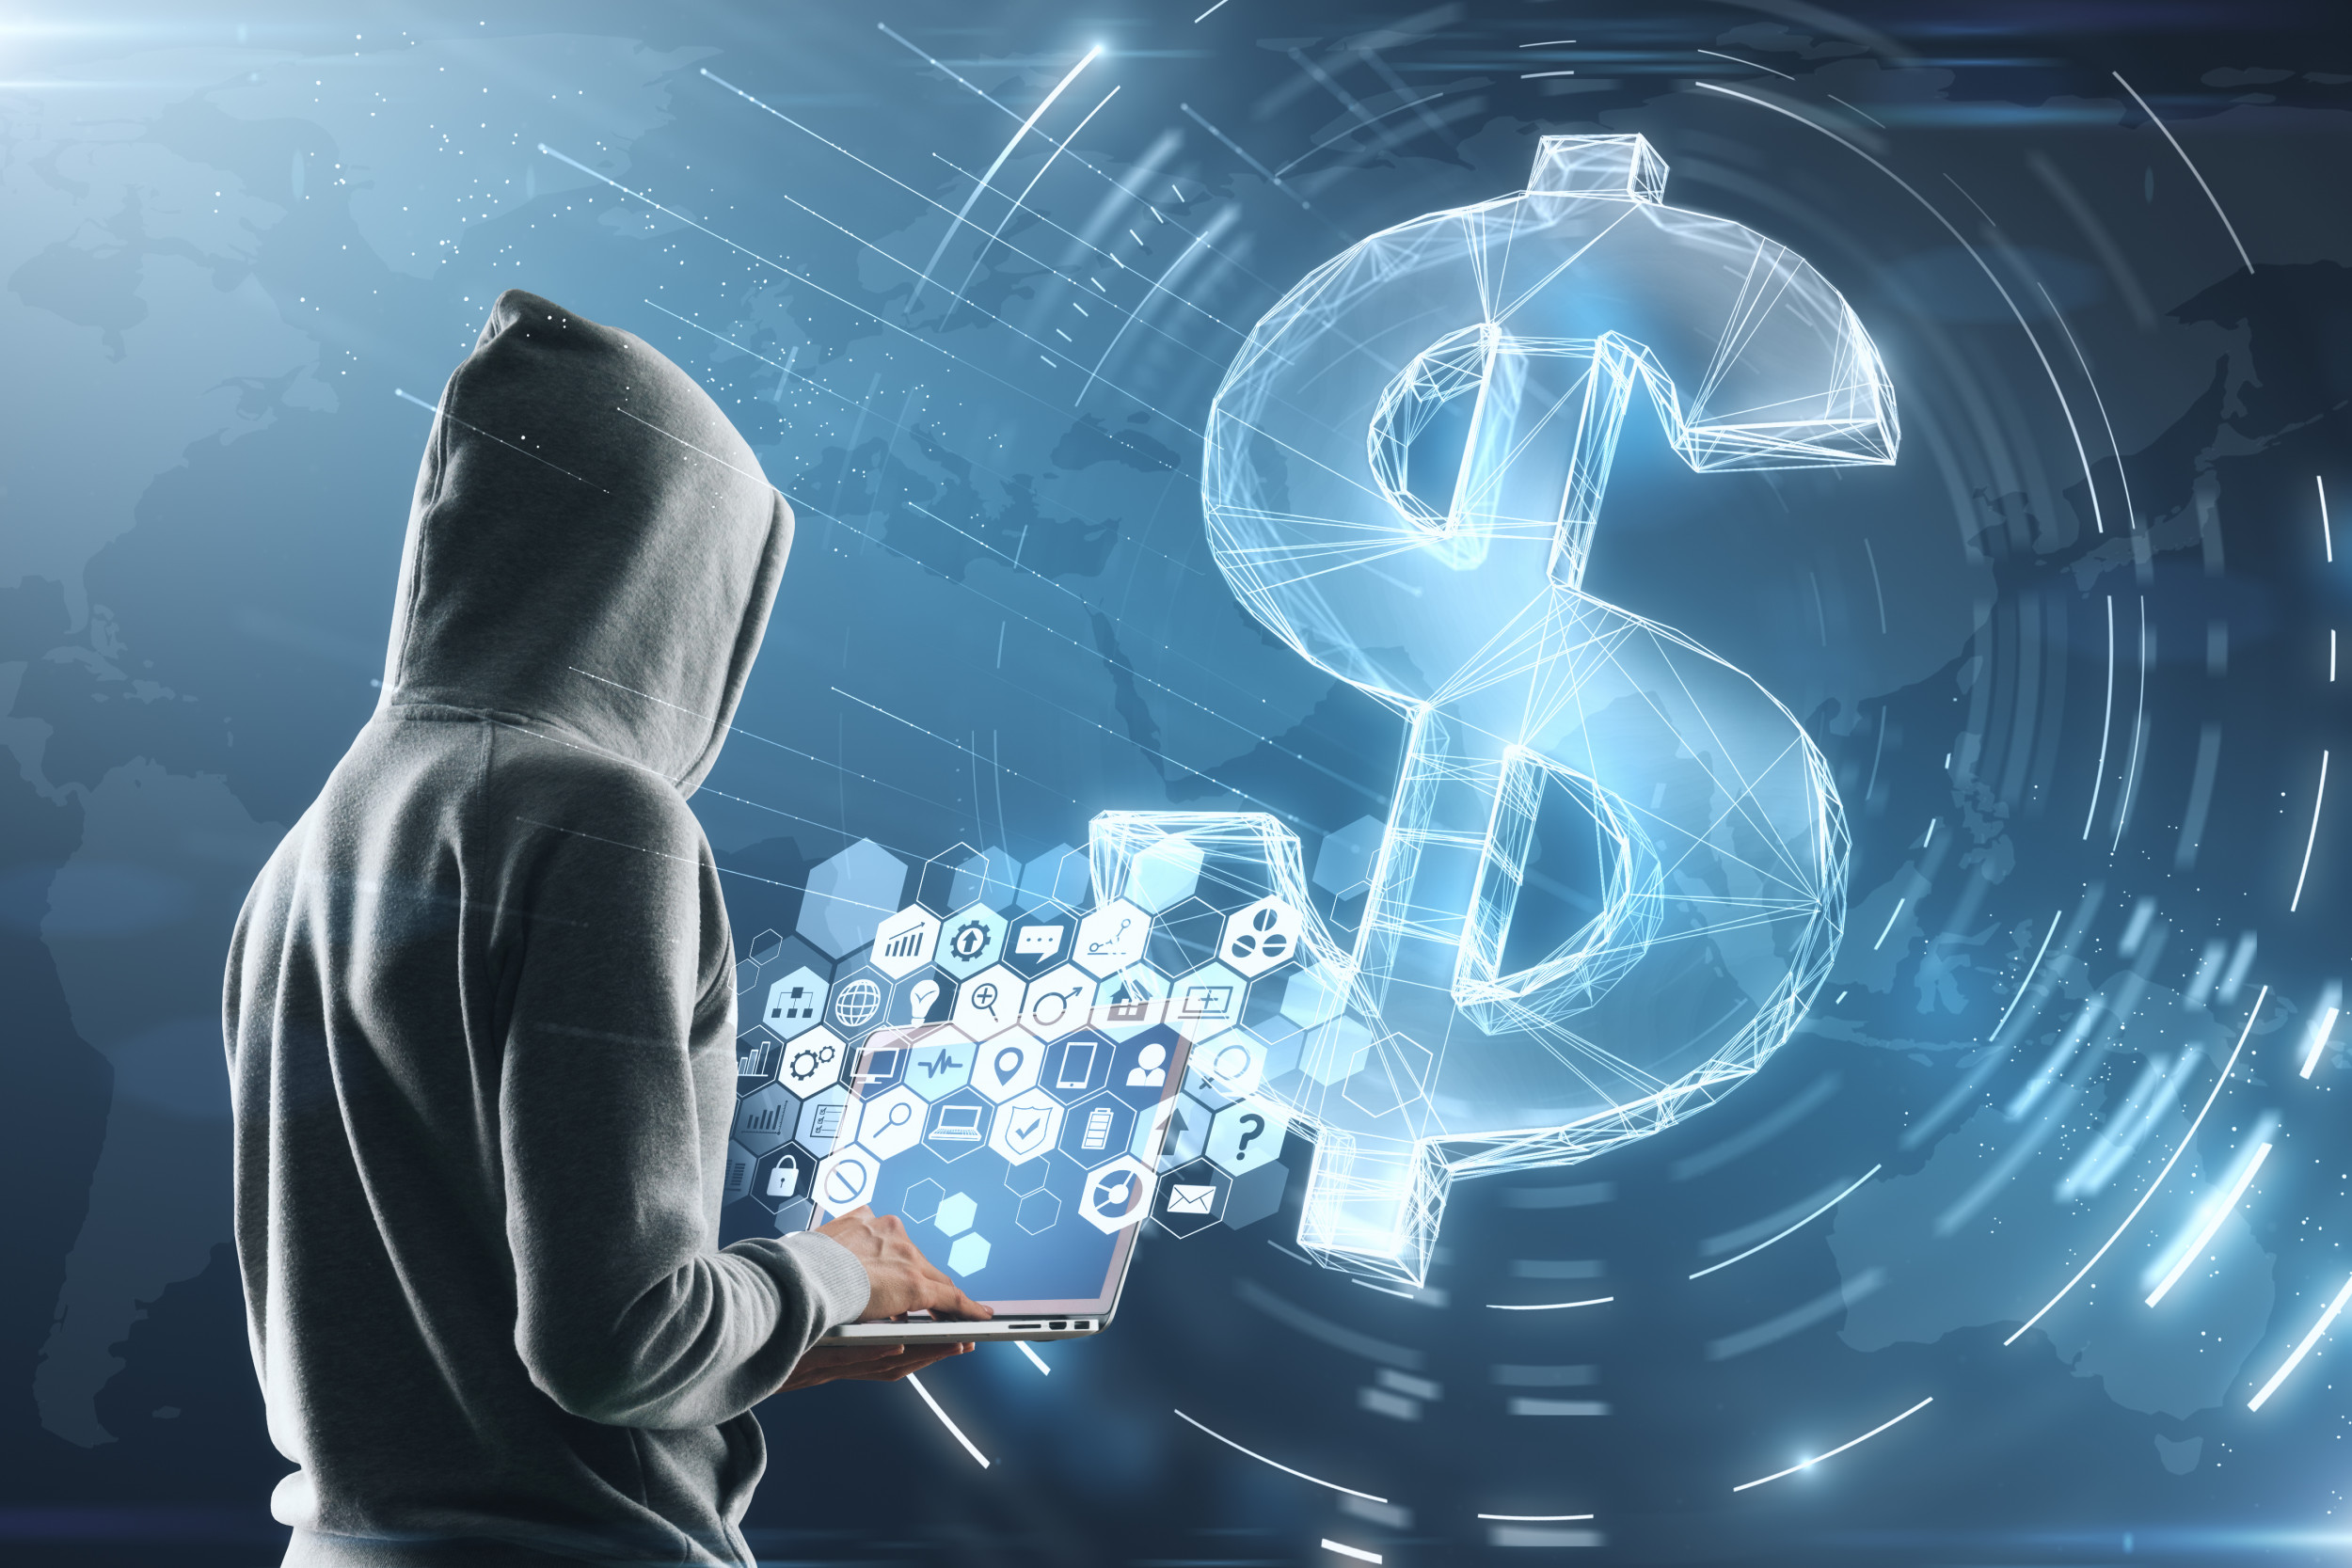 yearnfinance vault exploit hack ethereum millions funds1